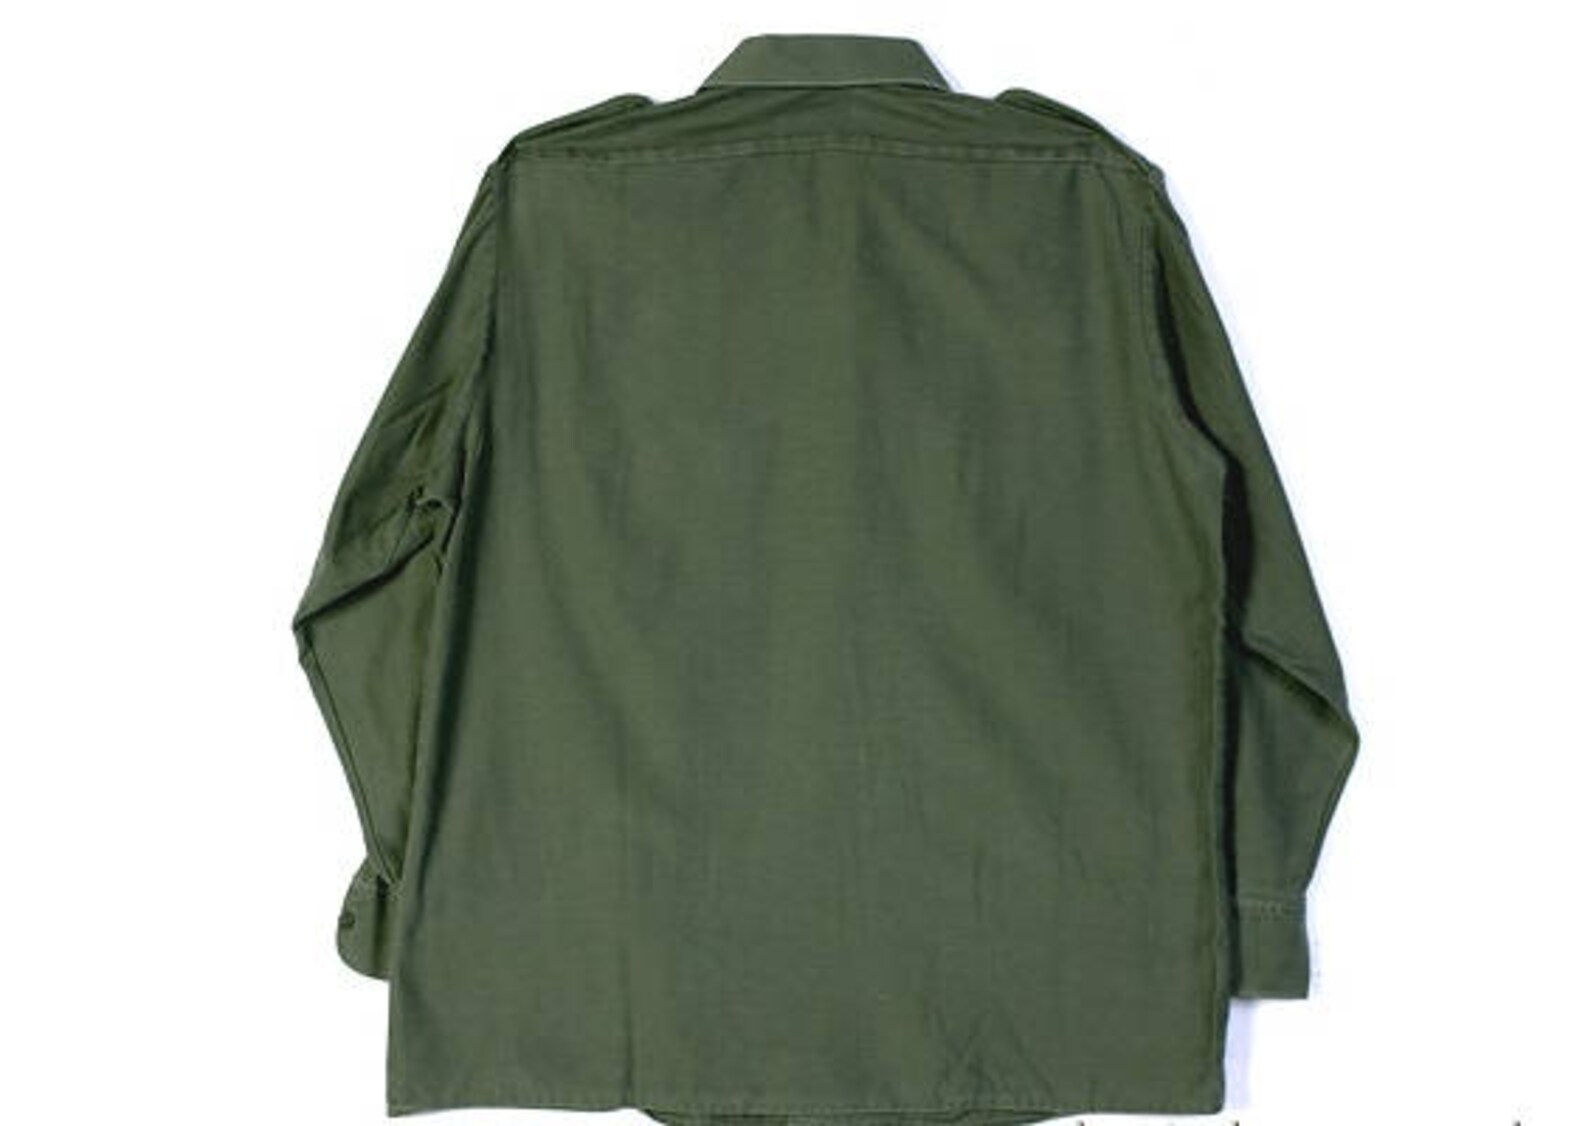 Vintage 1980s German army olive blouse military shirt khaki | Etsy